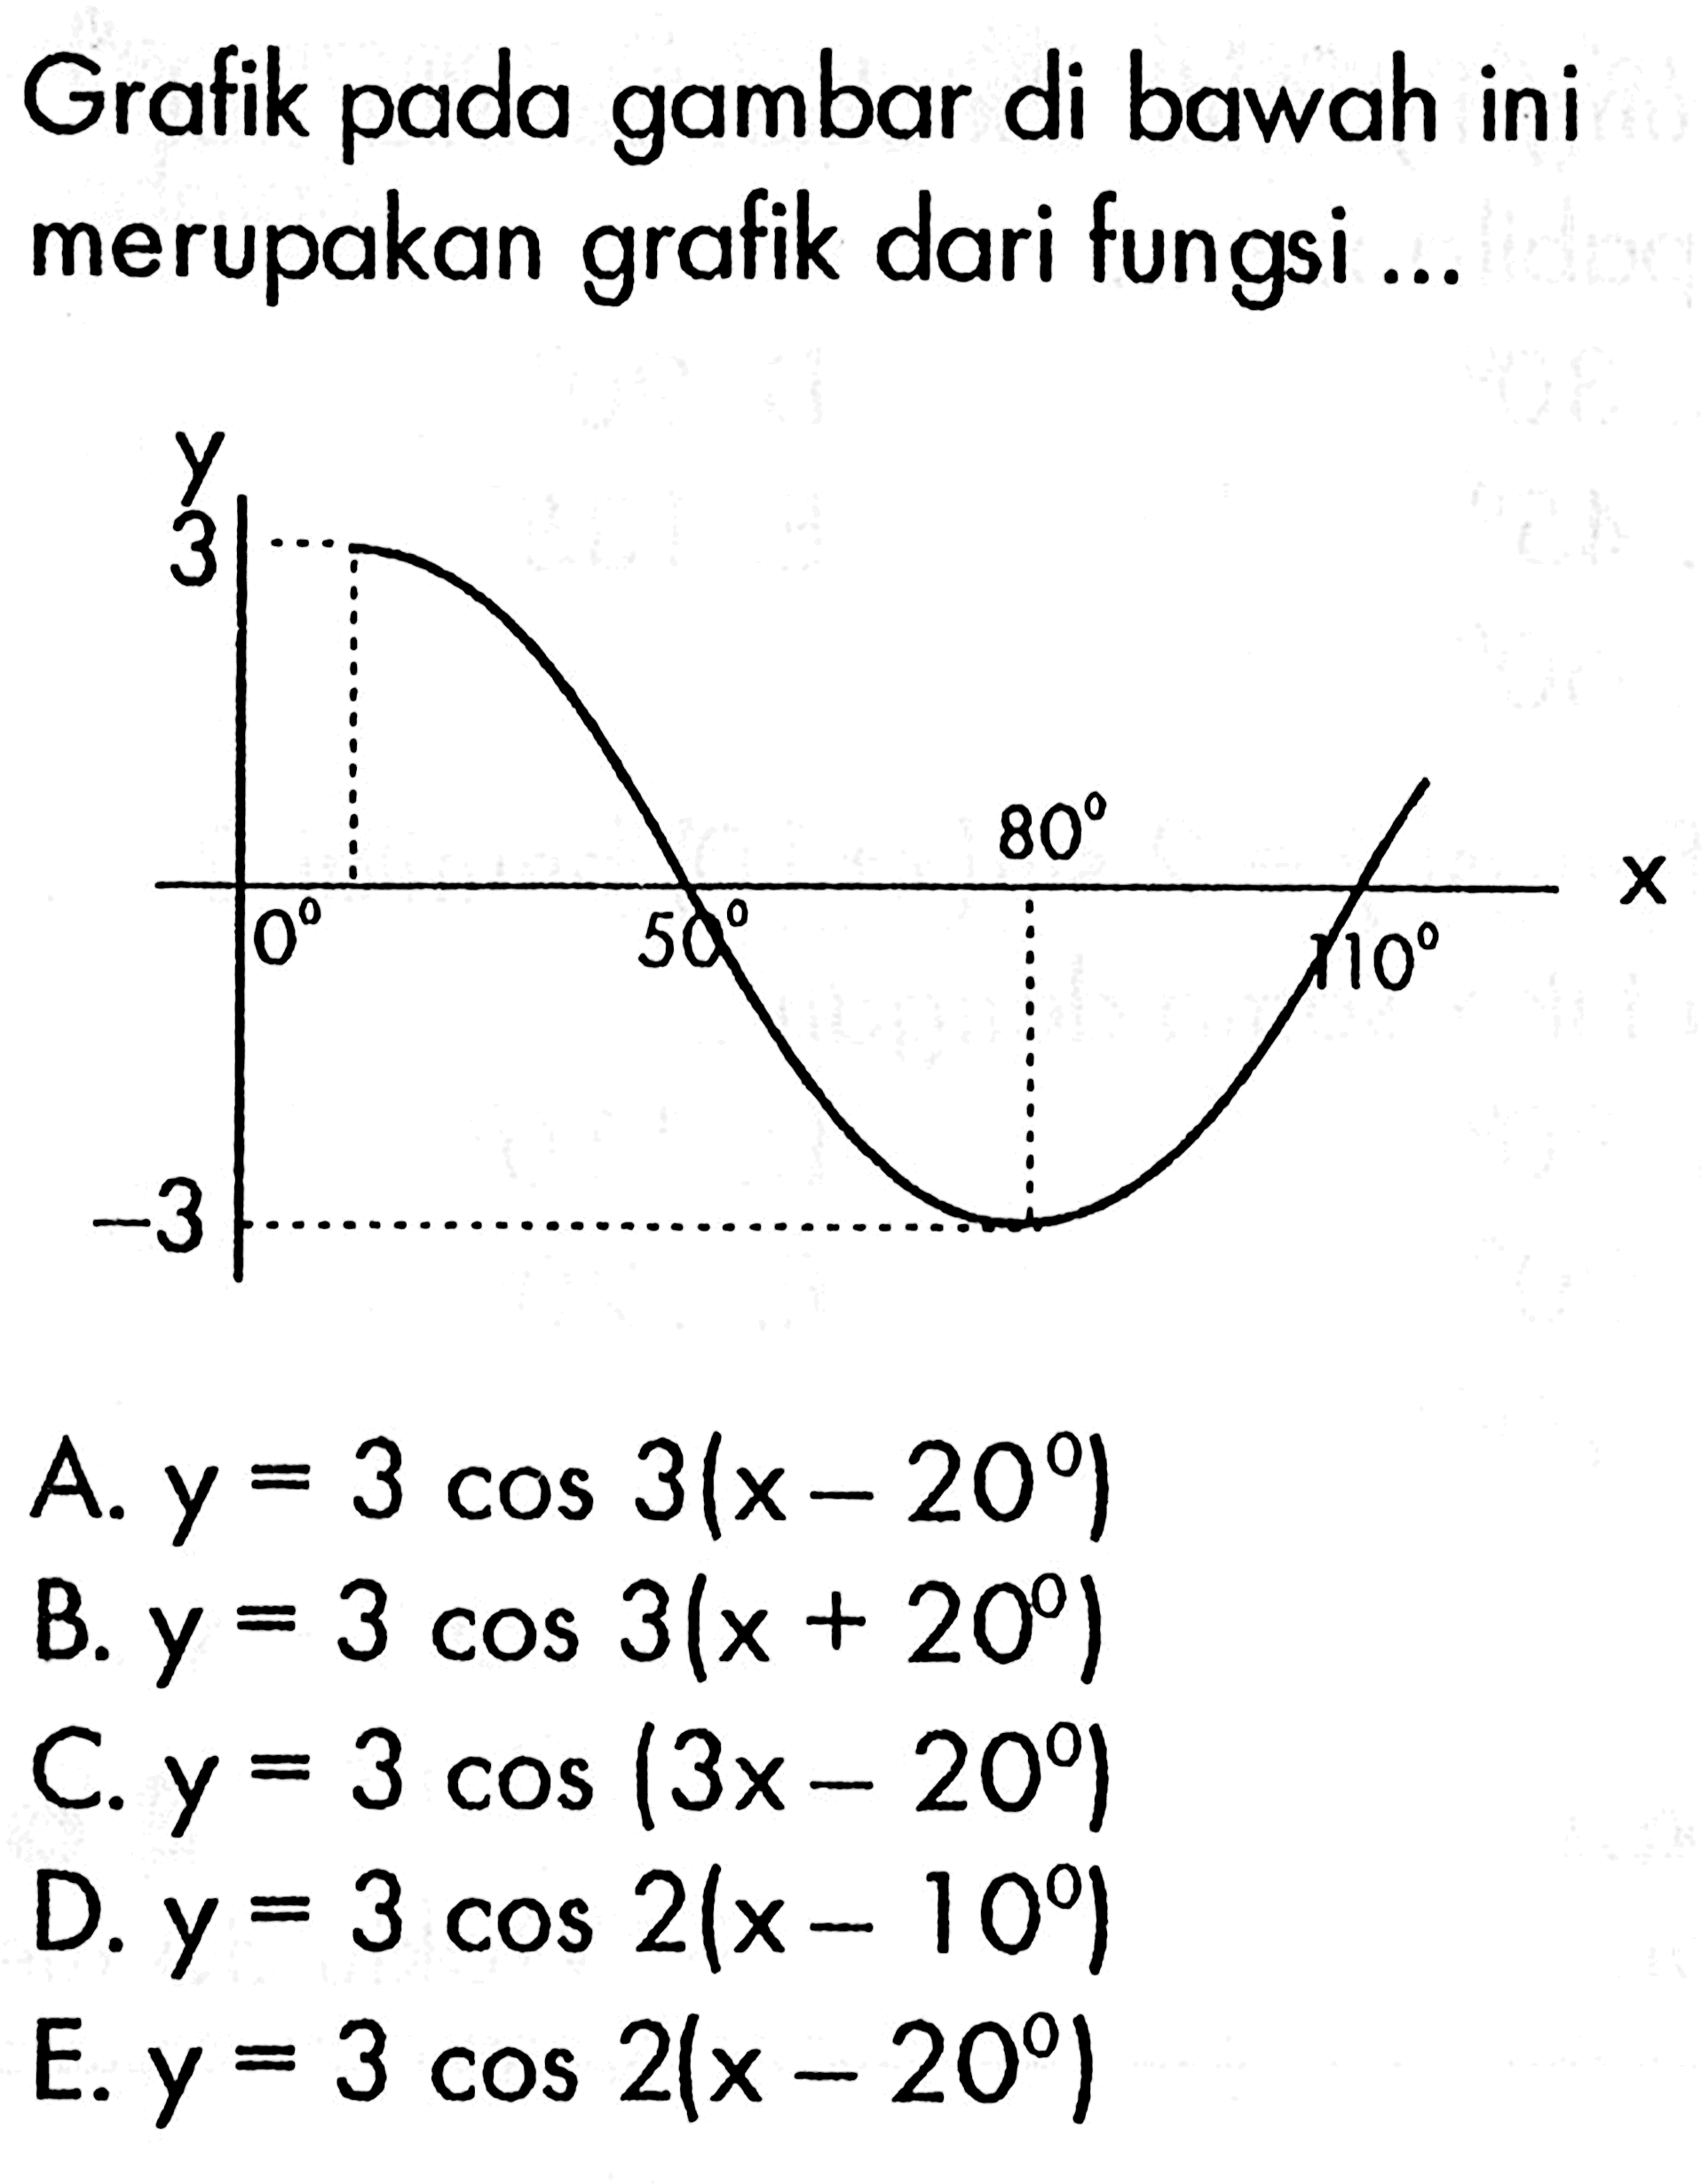 Grafik pada gambar di bawah ini merupakan grafik dari fungsi ... 3 0 50 80 110 -3
A.  y=3 cos 3(x-20) 
B.  y=3 cos 3(x+20) 
C.  y=3 cos (3x-20) 
D.  y=3 cos 2(x-10) 
E.  y=3 cos 2(x-20) 